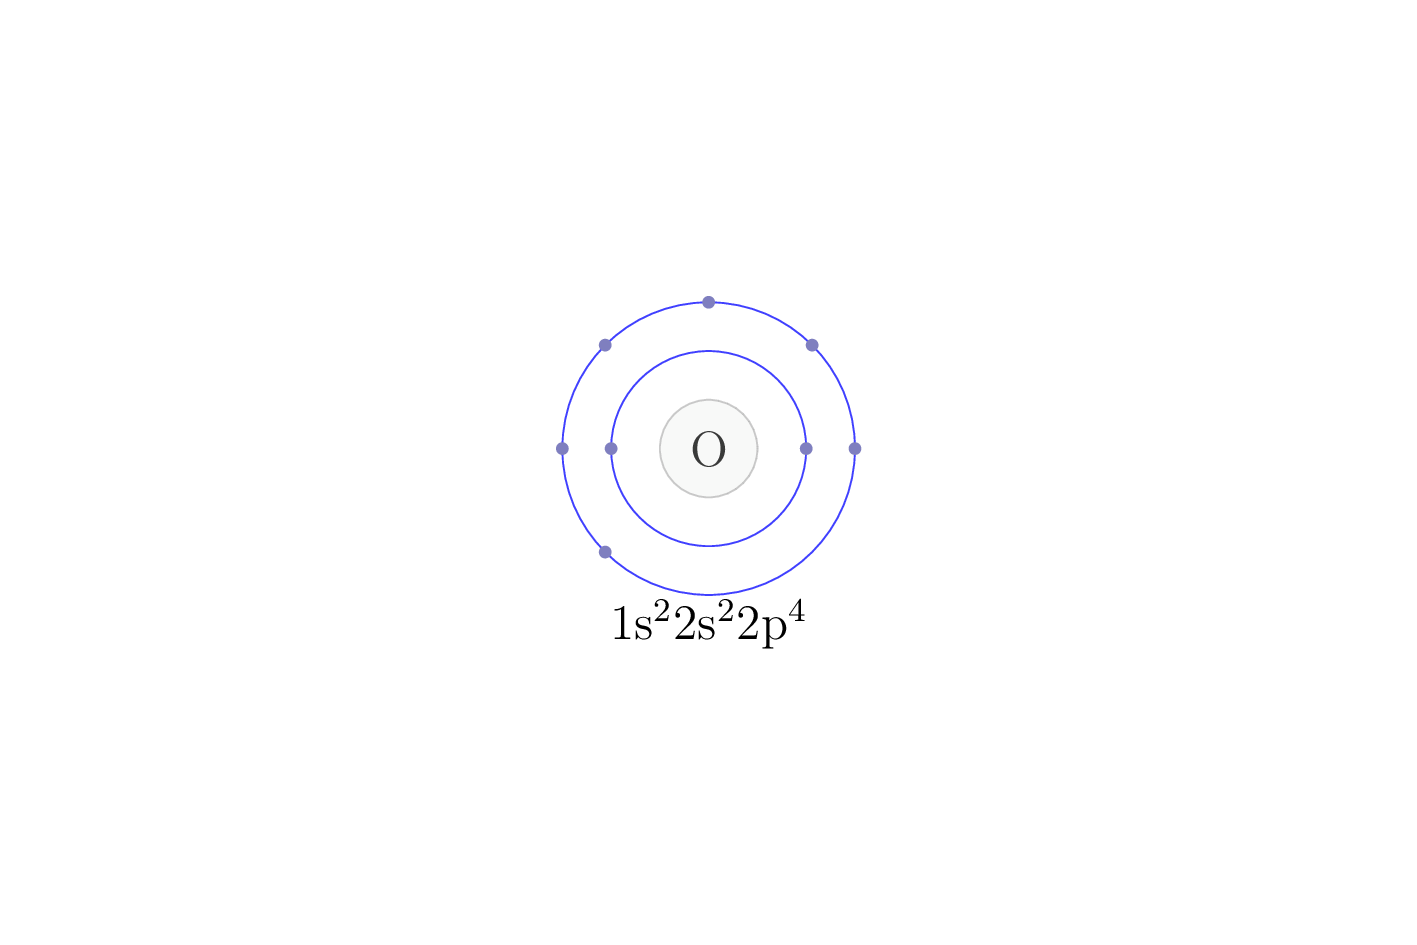 electron configuration of element O